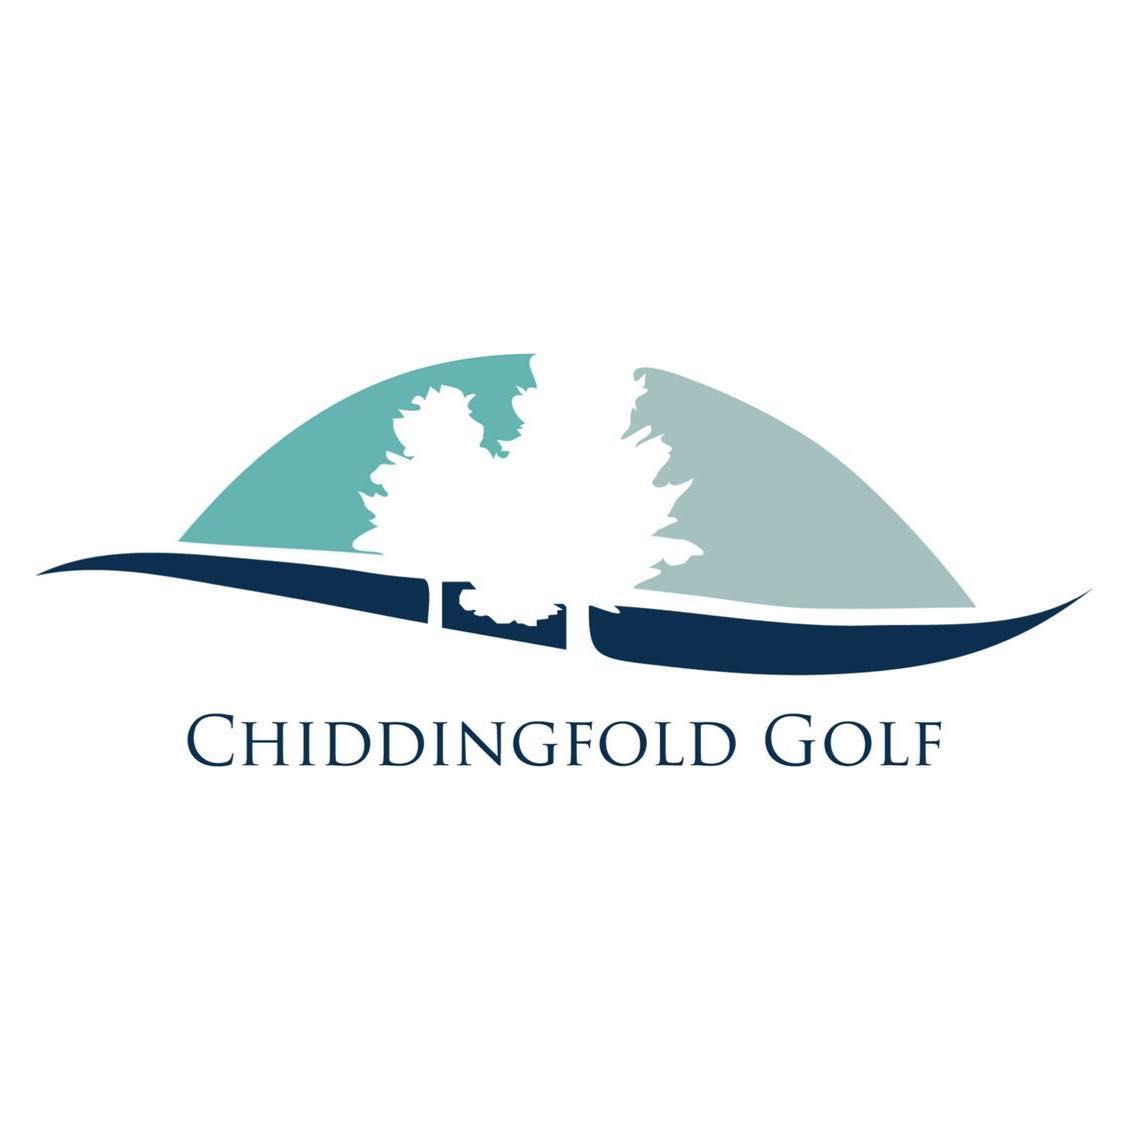 Chiddingfold Golf Club, Petworth road, GU8 4SL, Chiddingfold, England